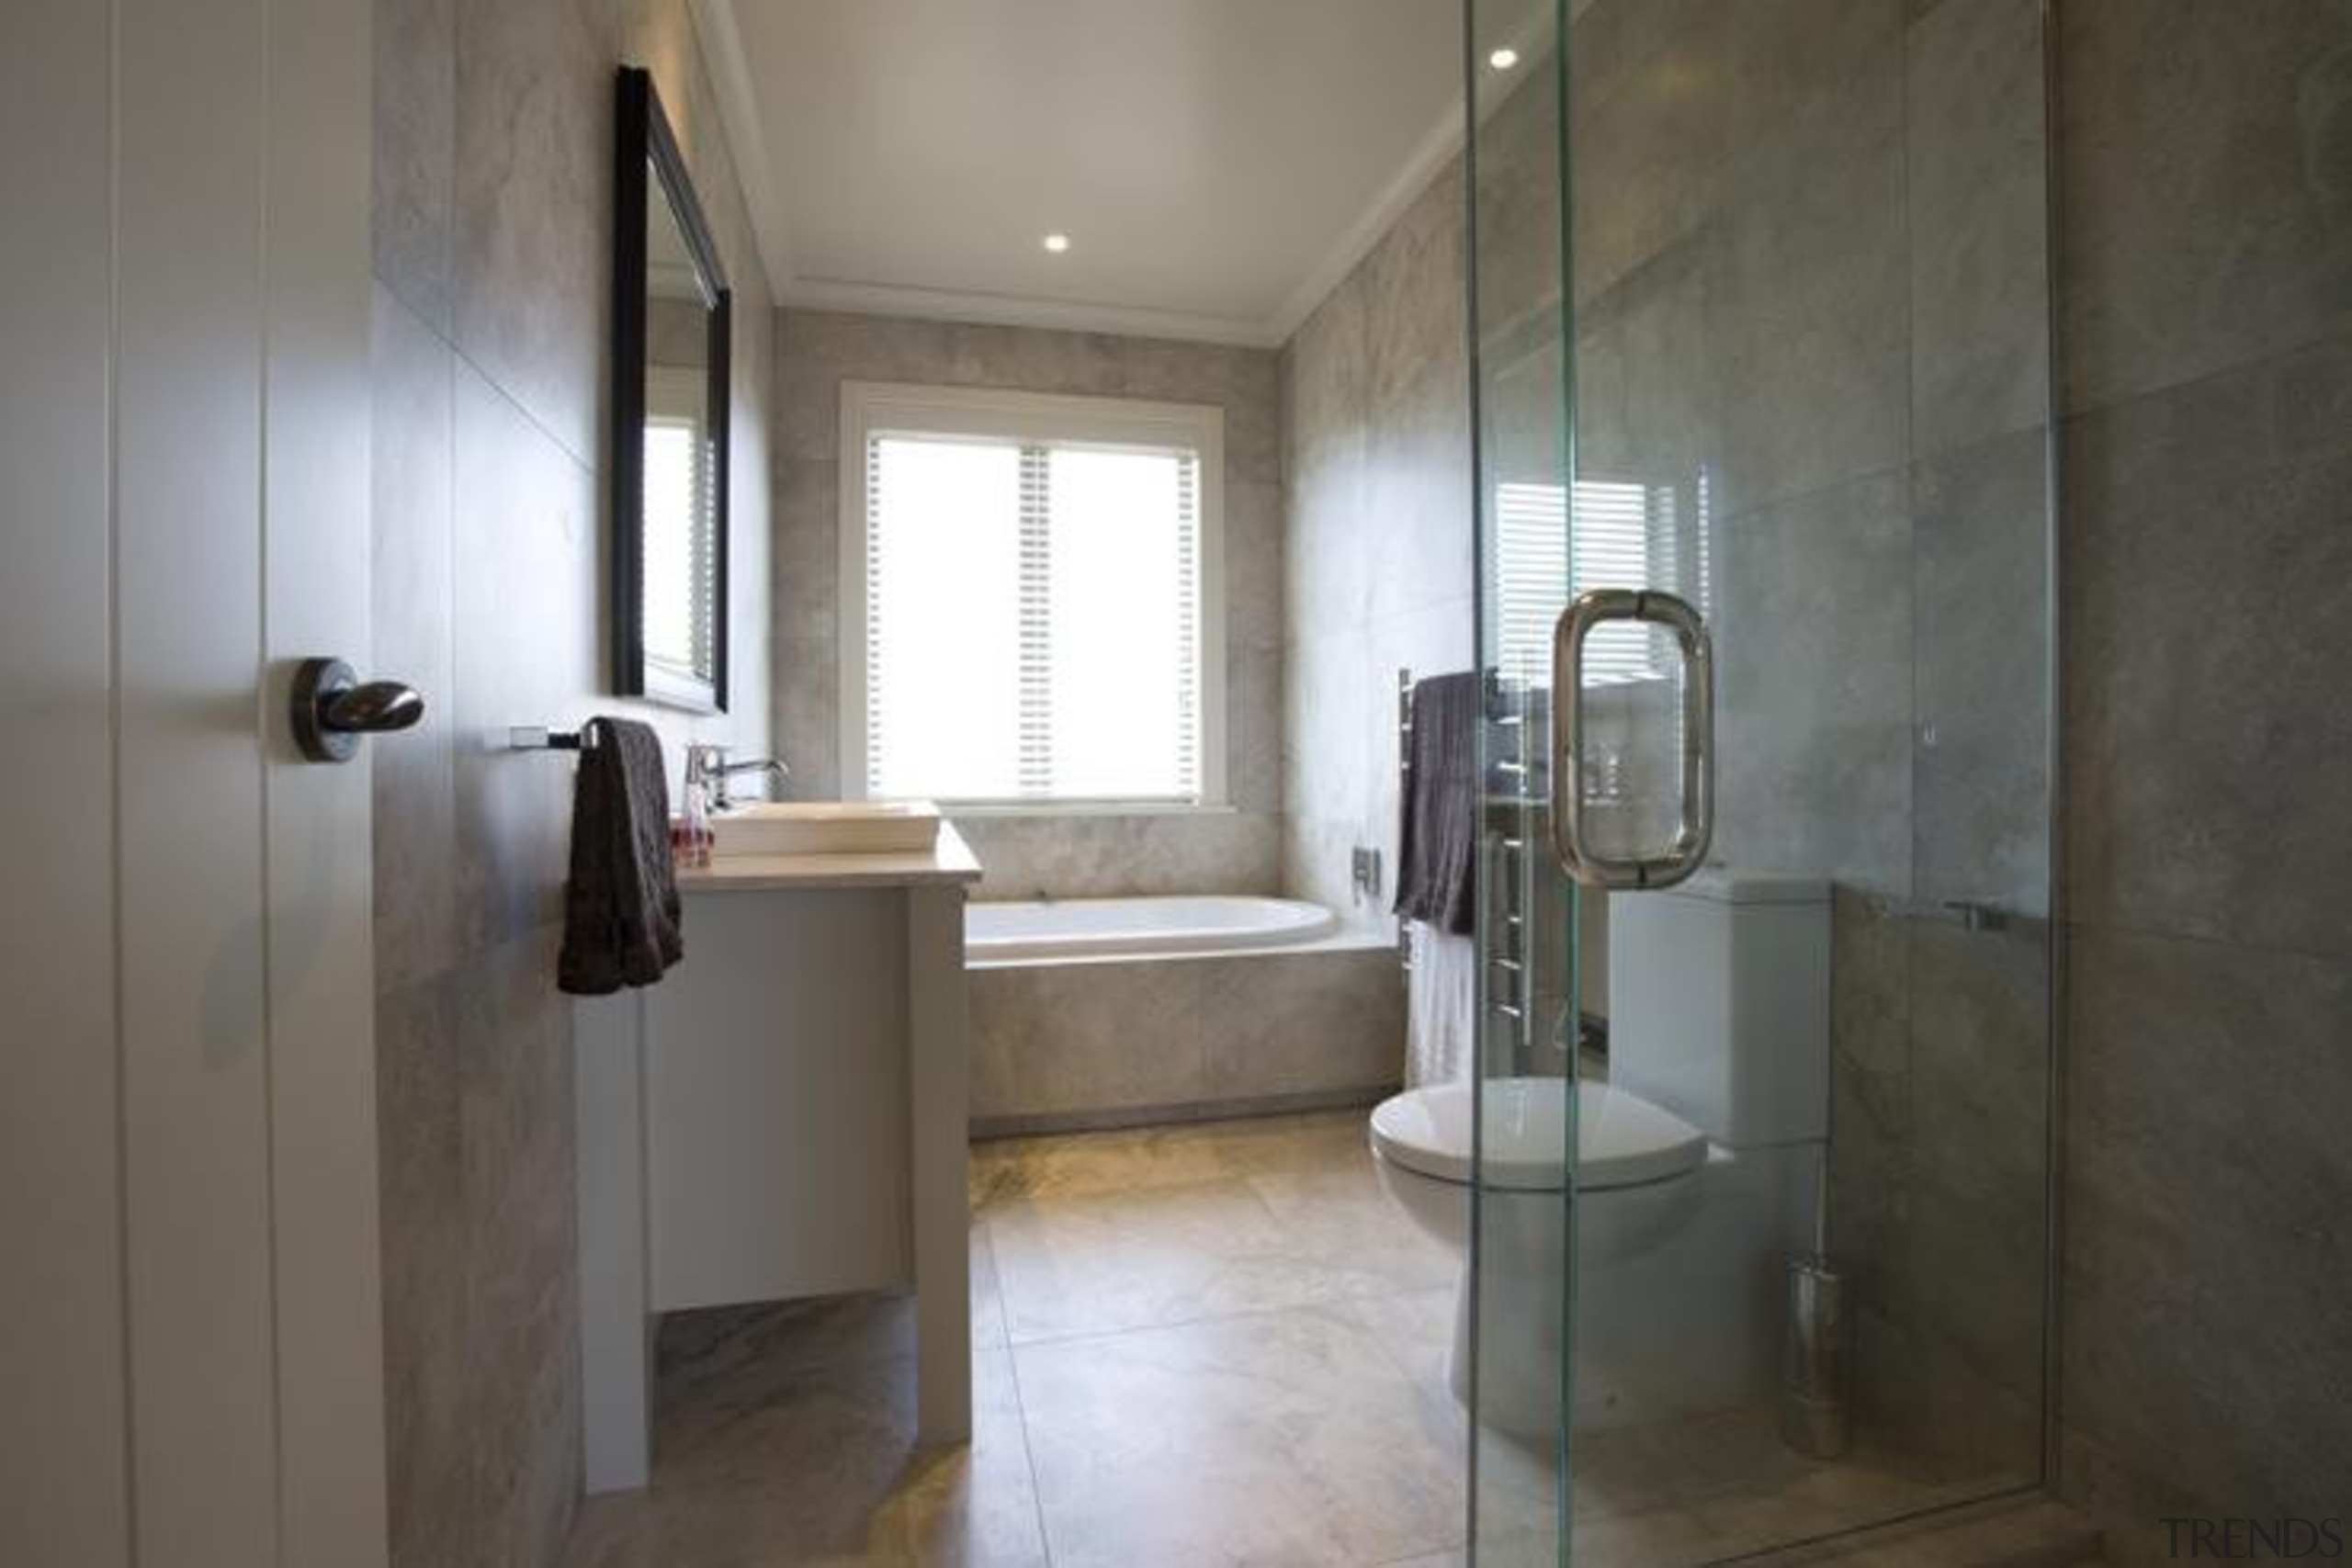 Bernini silver matt bathroom. - Bernini - bathroom bathroom, floor, interior design, property, real estate, room, gray, black